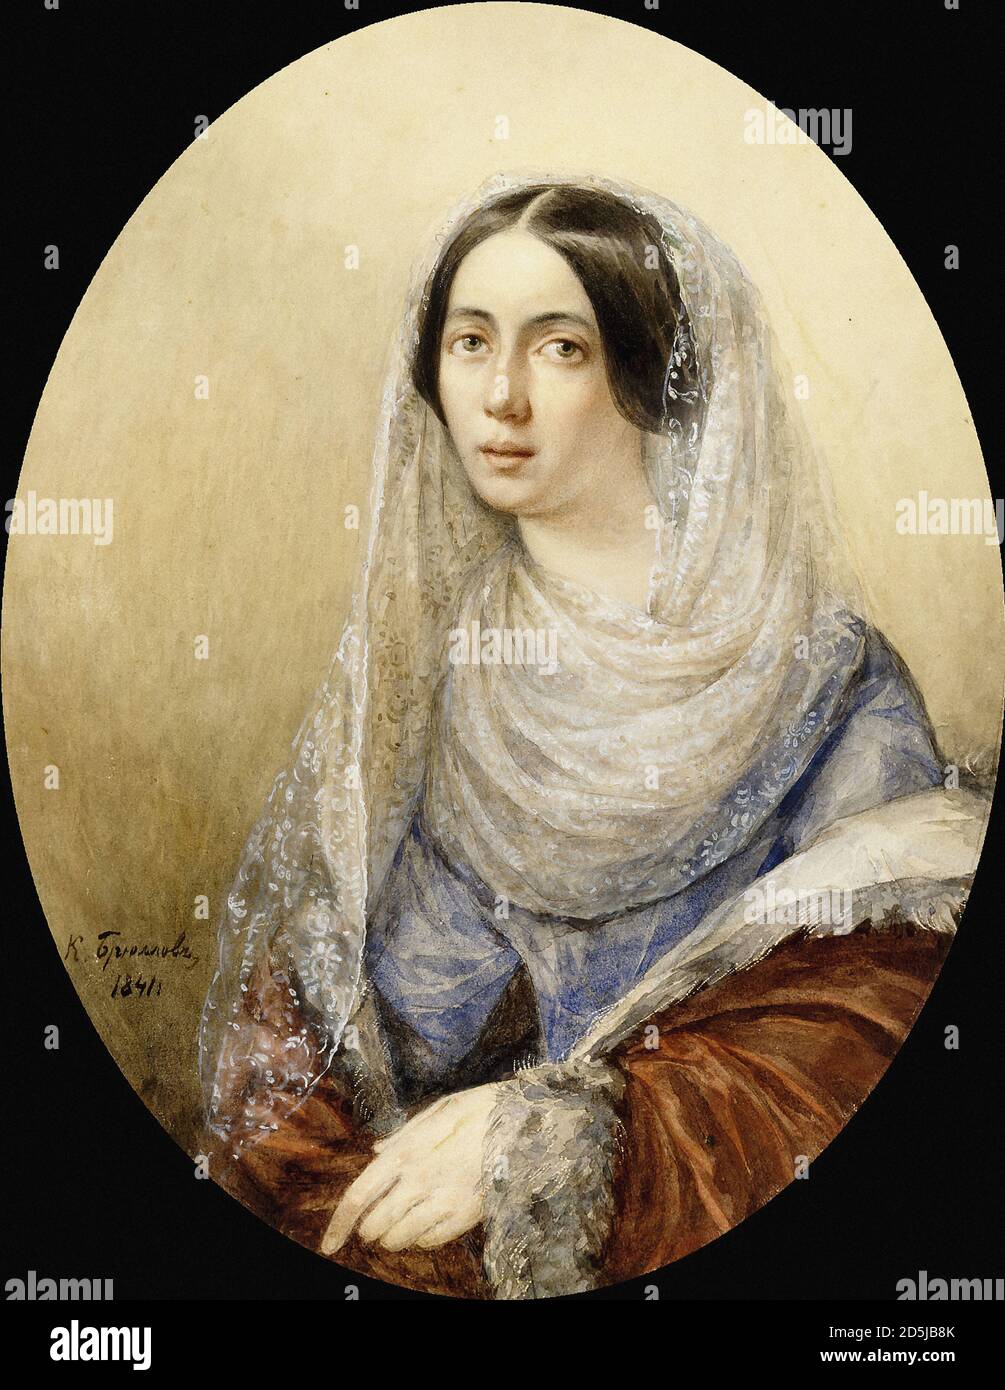 Briullov Karl - Retrato de una mujer - Escuela Rusa - siglo XIX Foto de stock